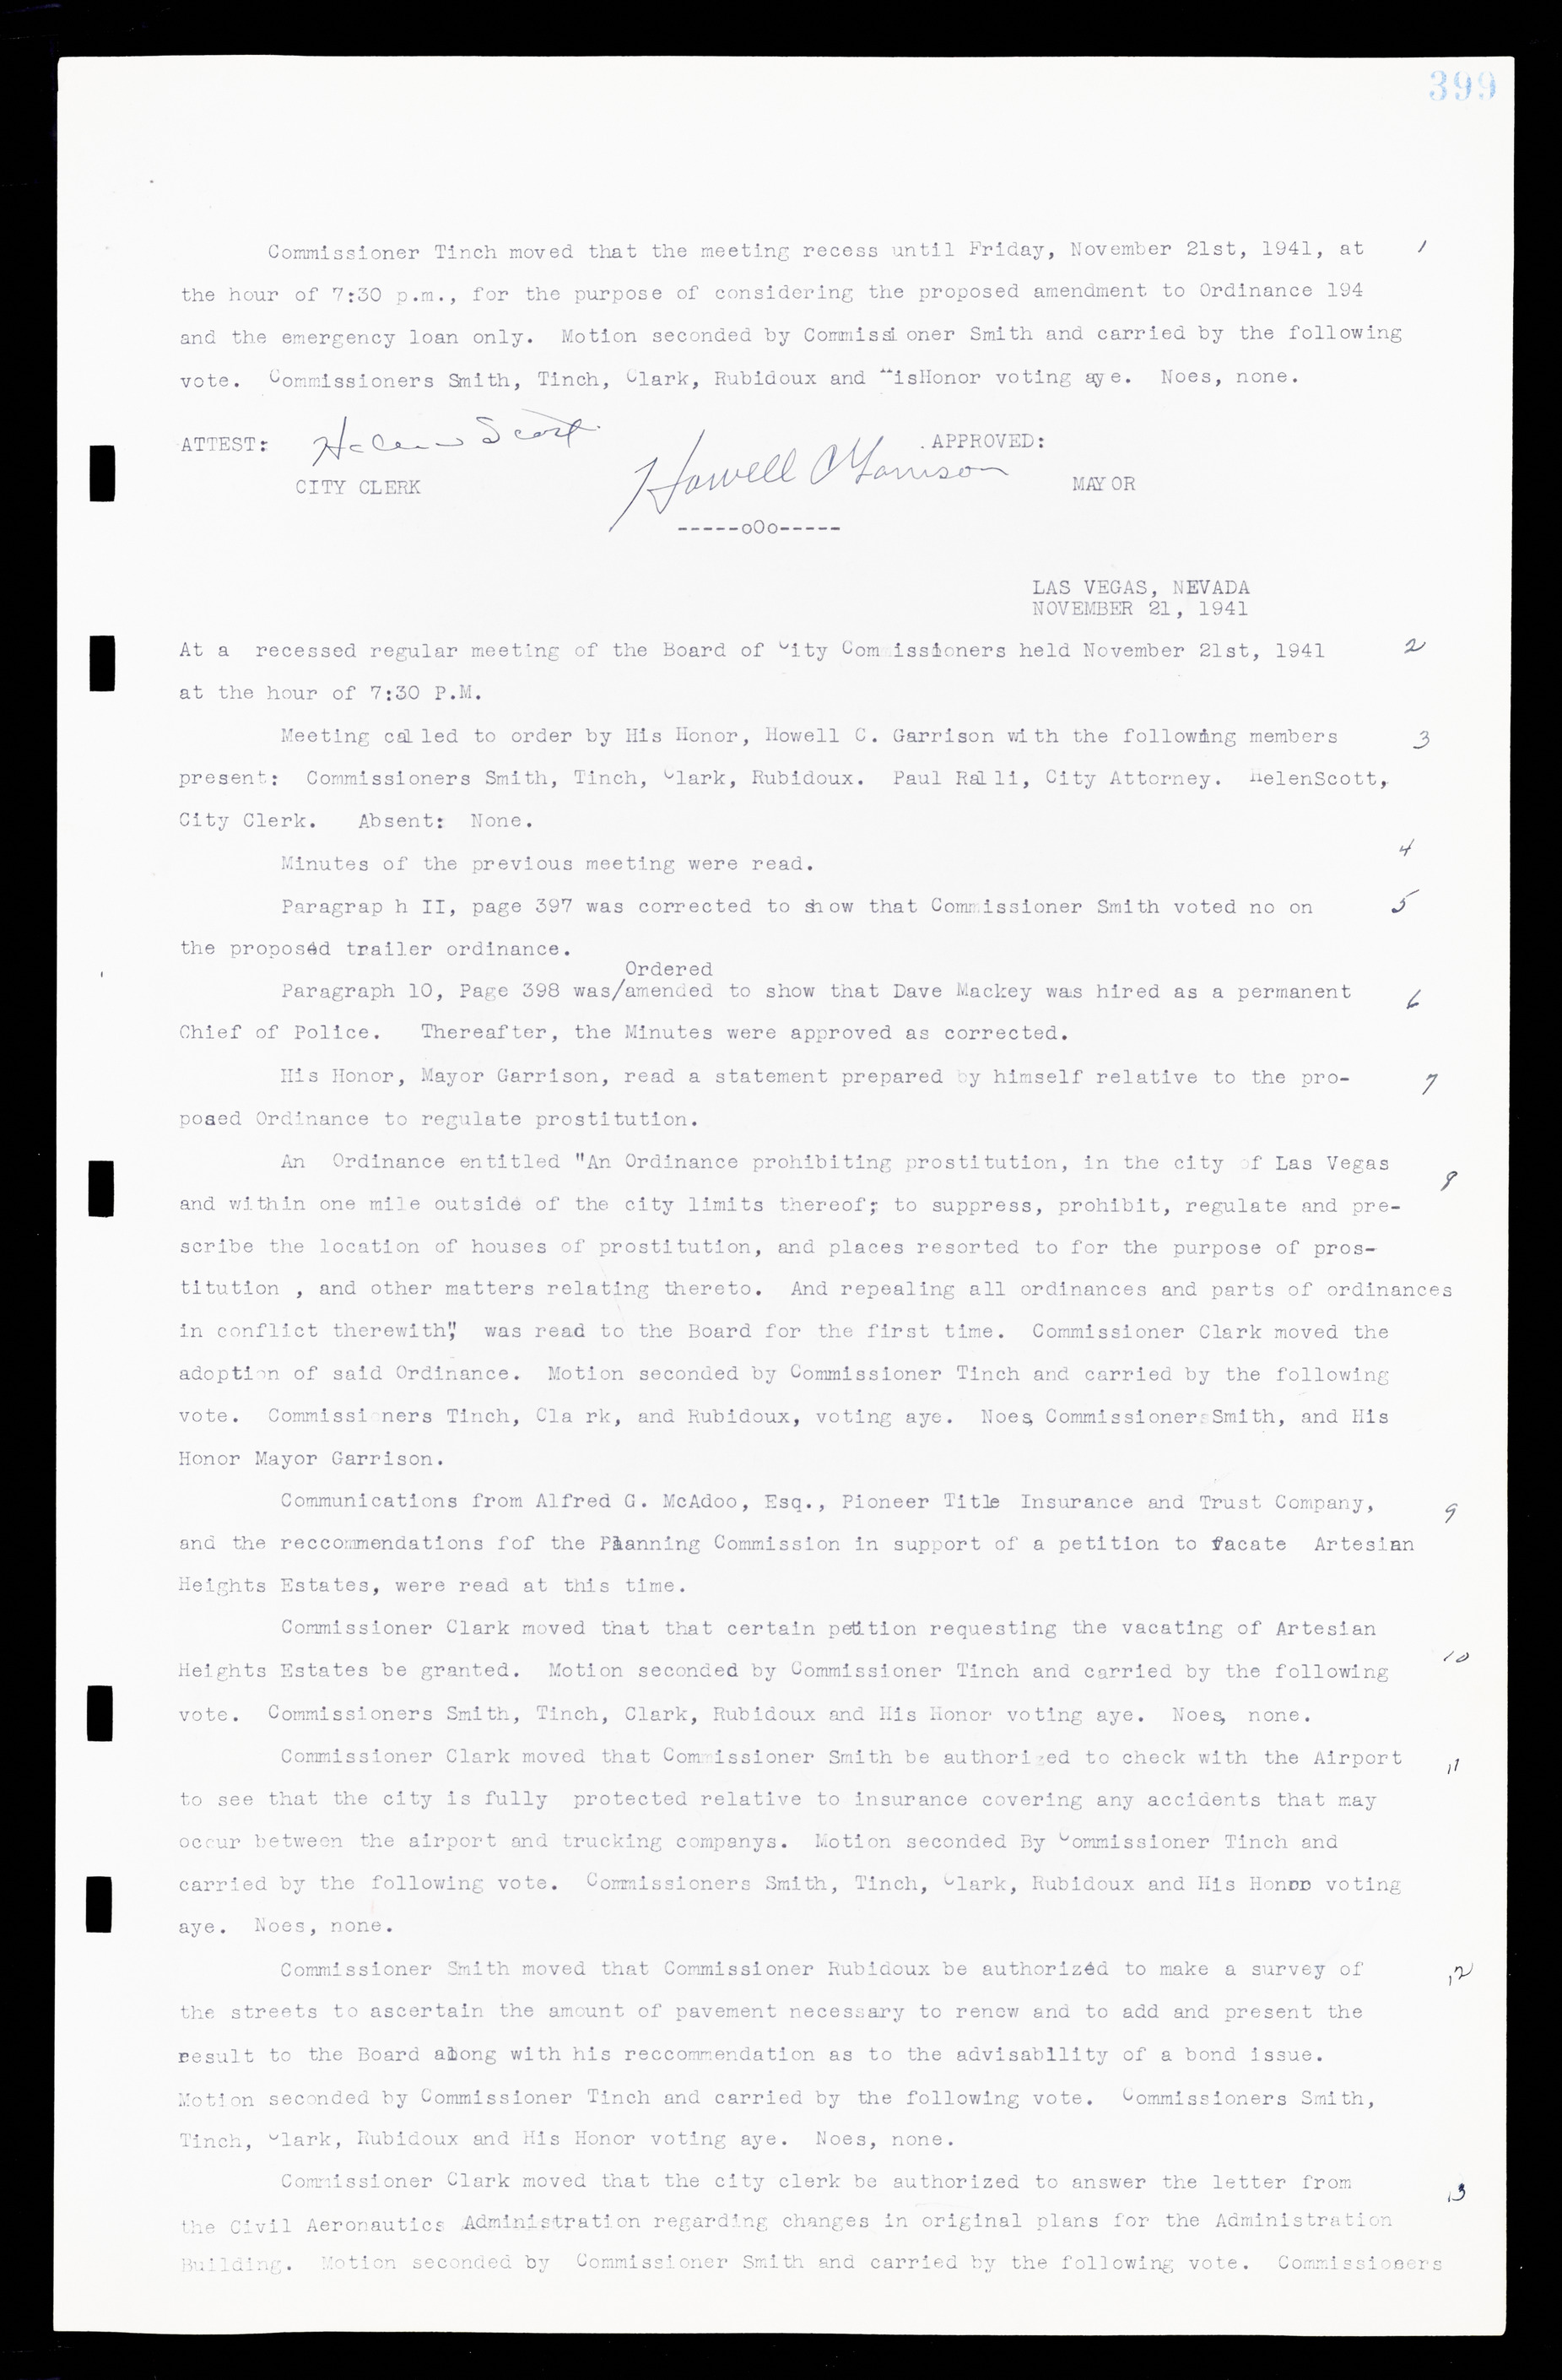 Las Vegas City Commission Minutes, February 17, 1937 to August 4, 1942, lvc000004-425